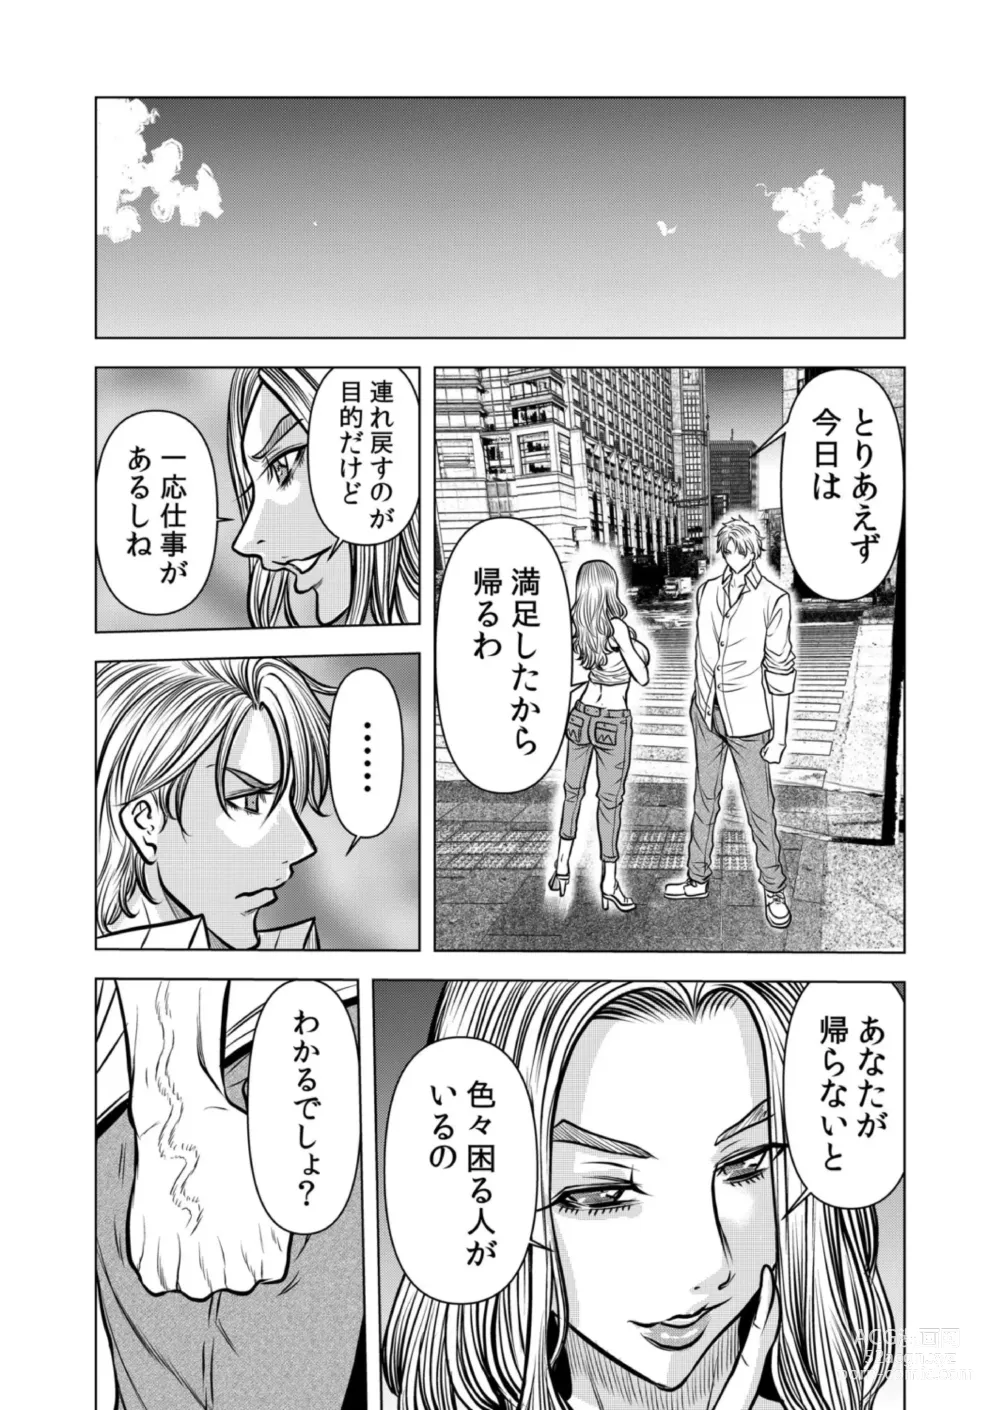 Page 72 of manga Mamasan,yobai ha OK desuka? VOL12